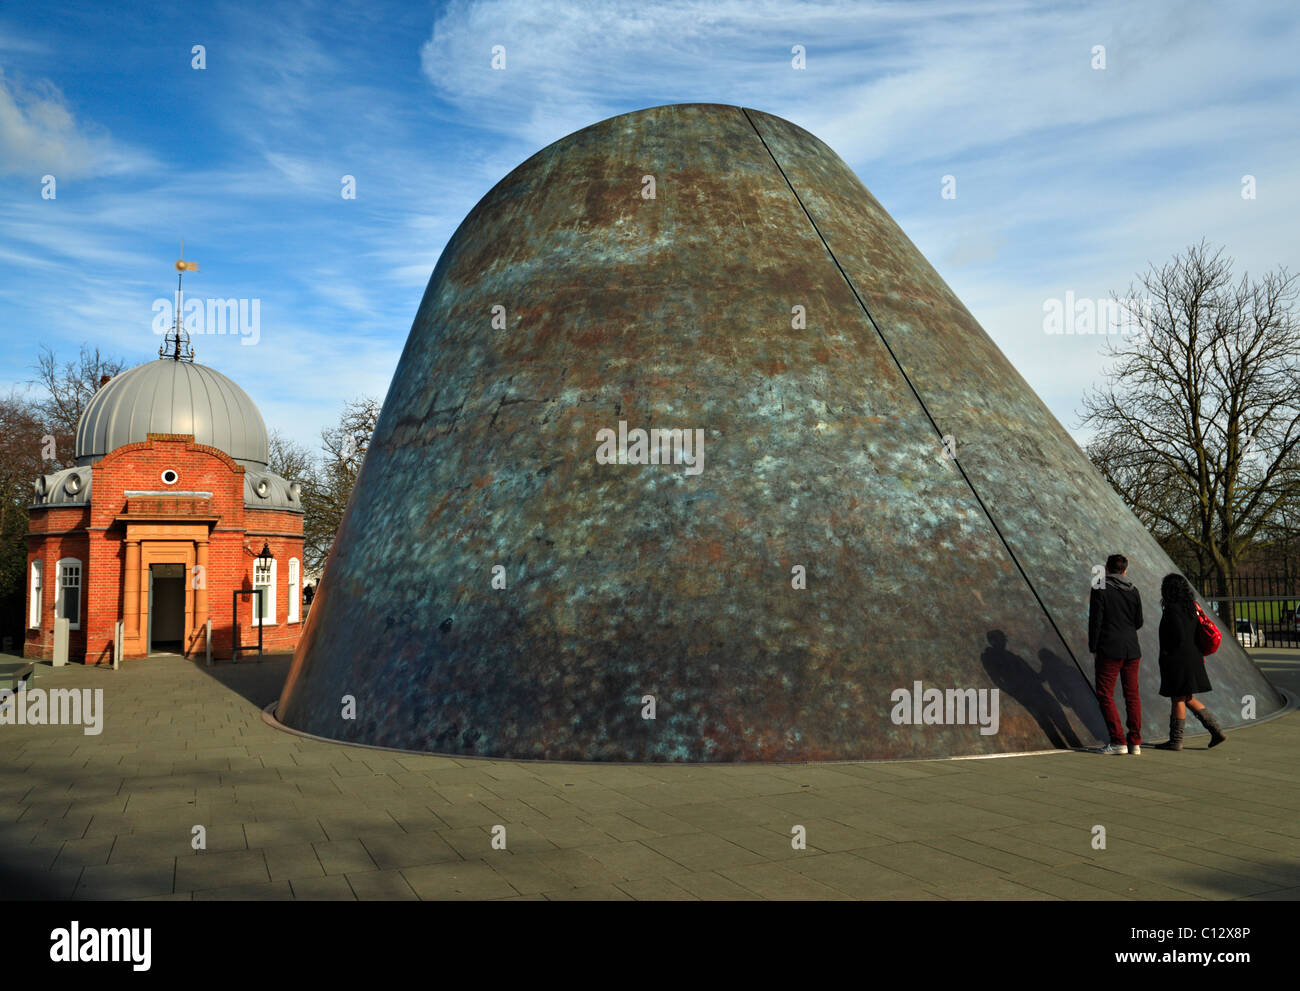 Royal Observatory Peter Harrison planetarium, Greenwich, London. Stock Photo